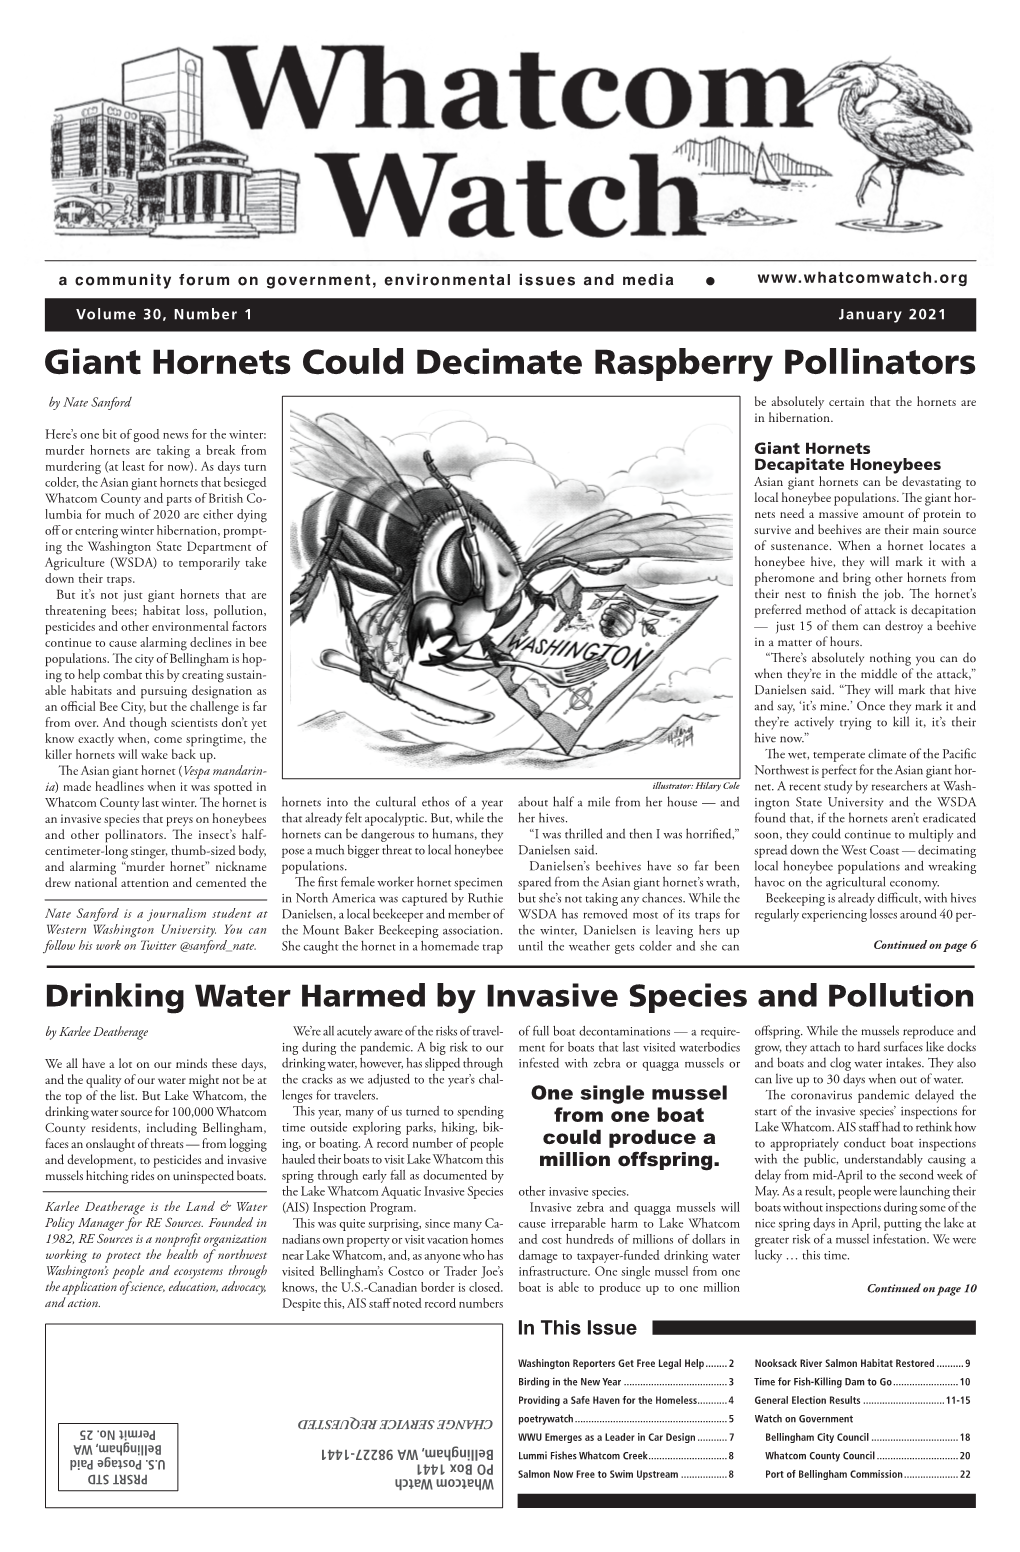 Giant Hornets Could Decimate Raspberry Pollinators